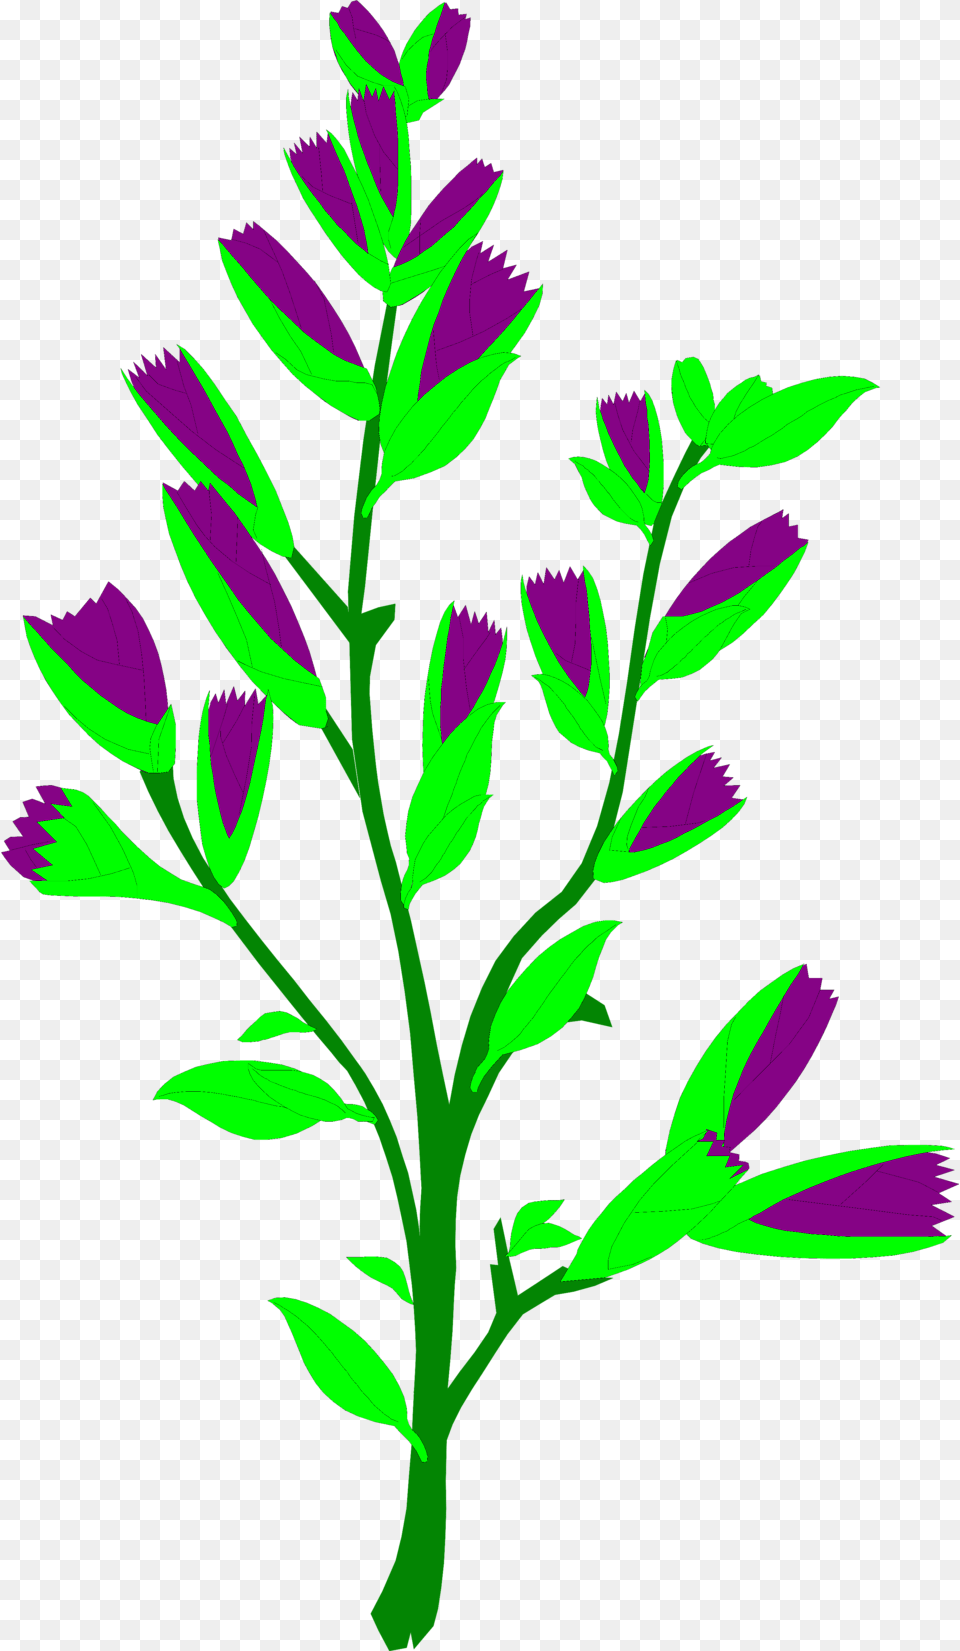 Sagebrush Stock Photo Illustration Of A Sagebrush Sage Bush Clipart, Purple, Plant, Pattern, Herbs Free Png